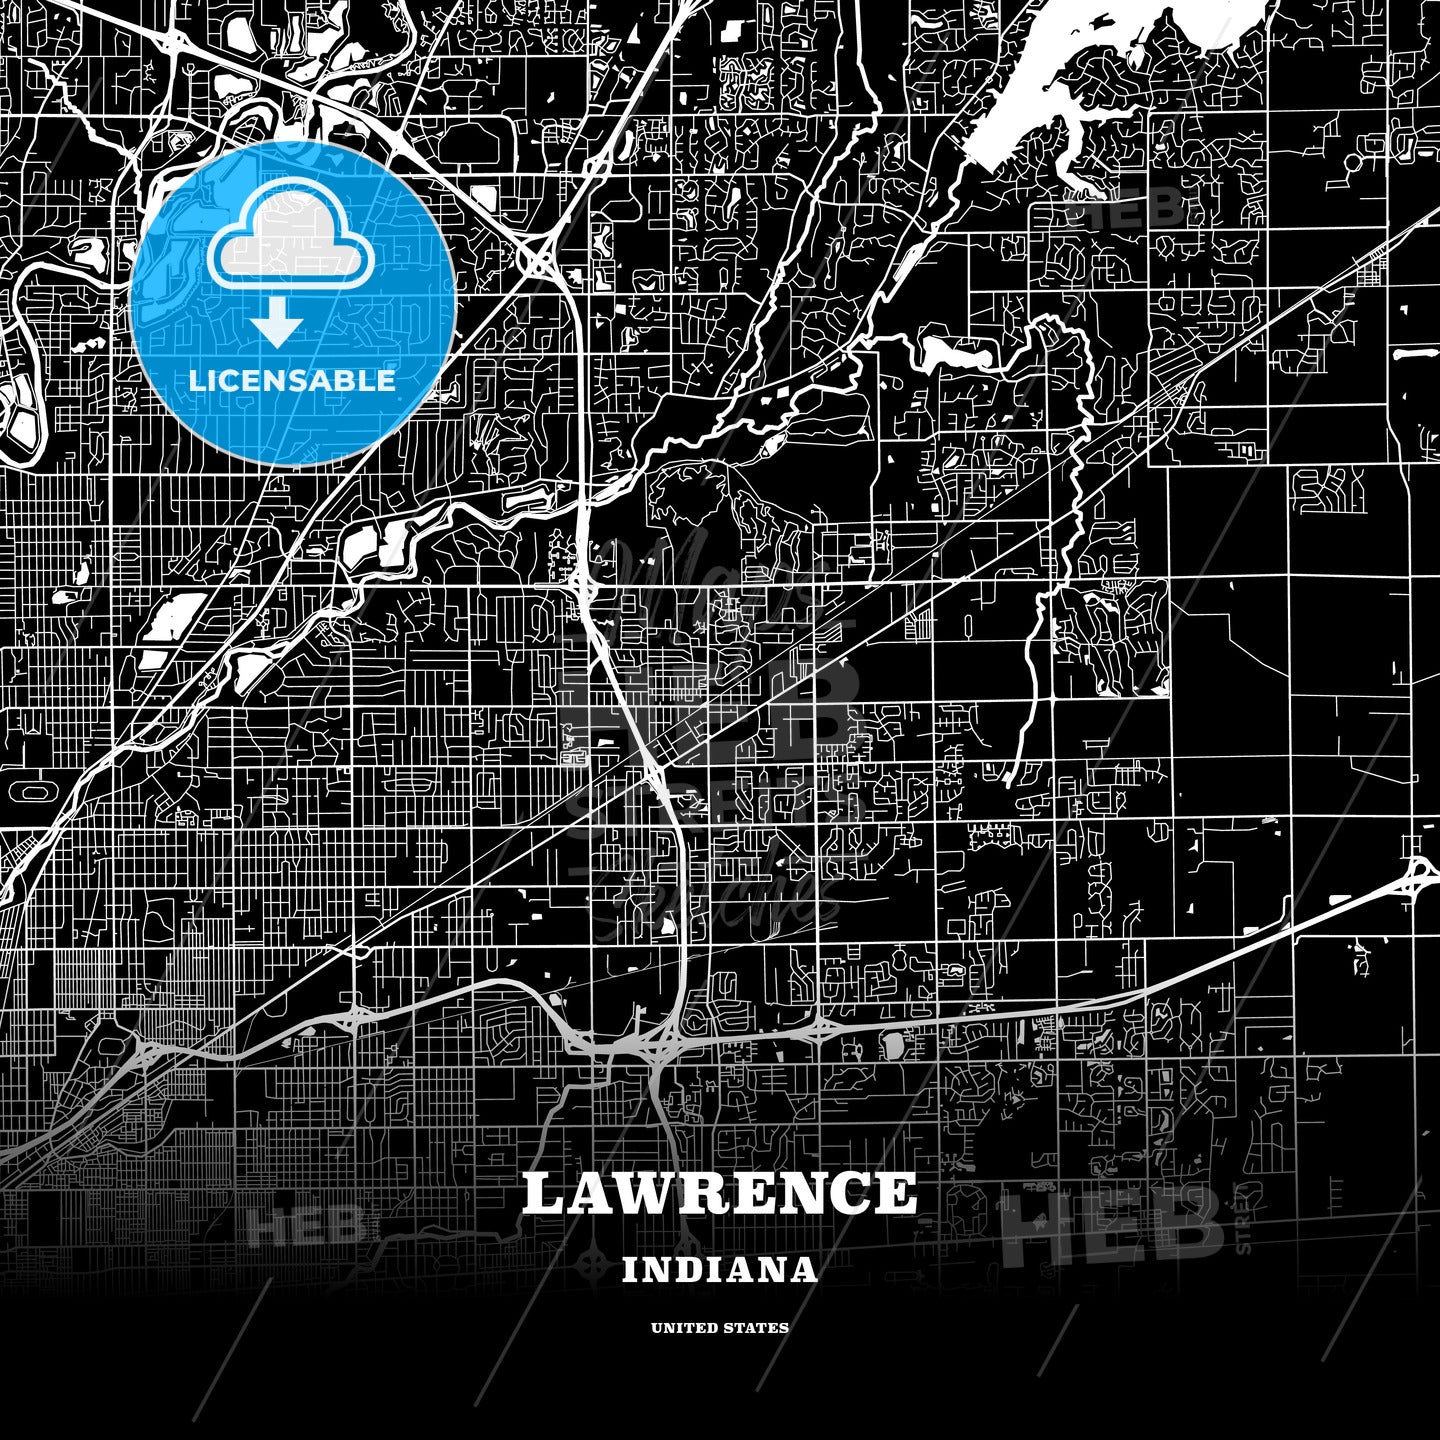 Lawrence, Indiana, USA map